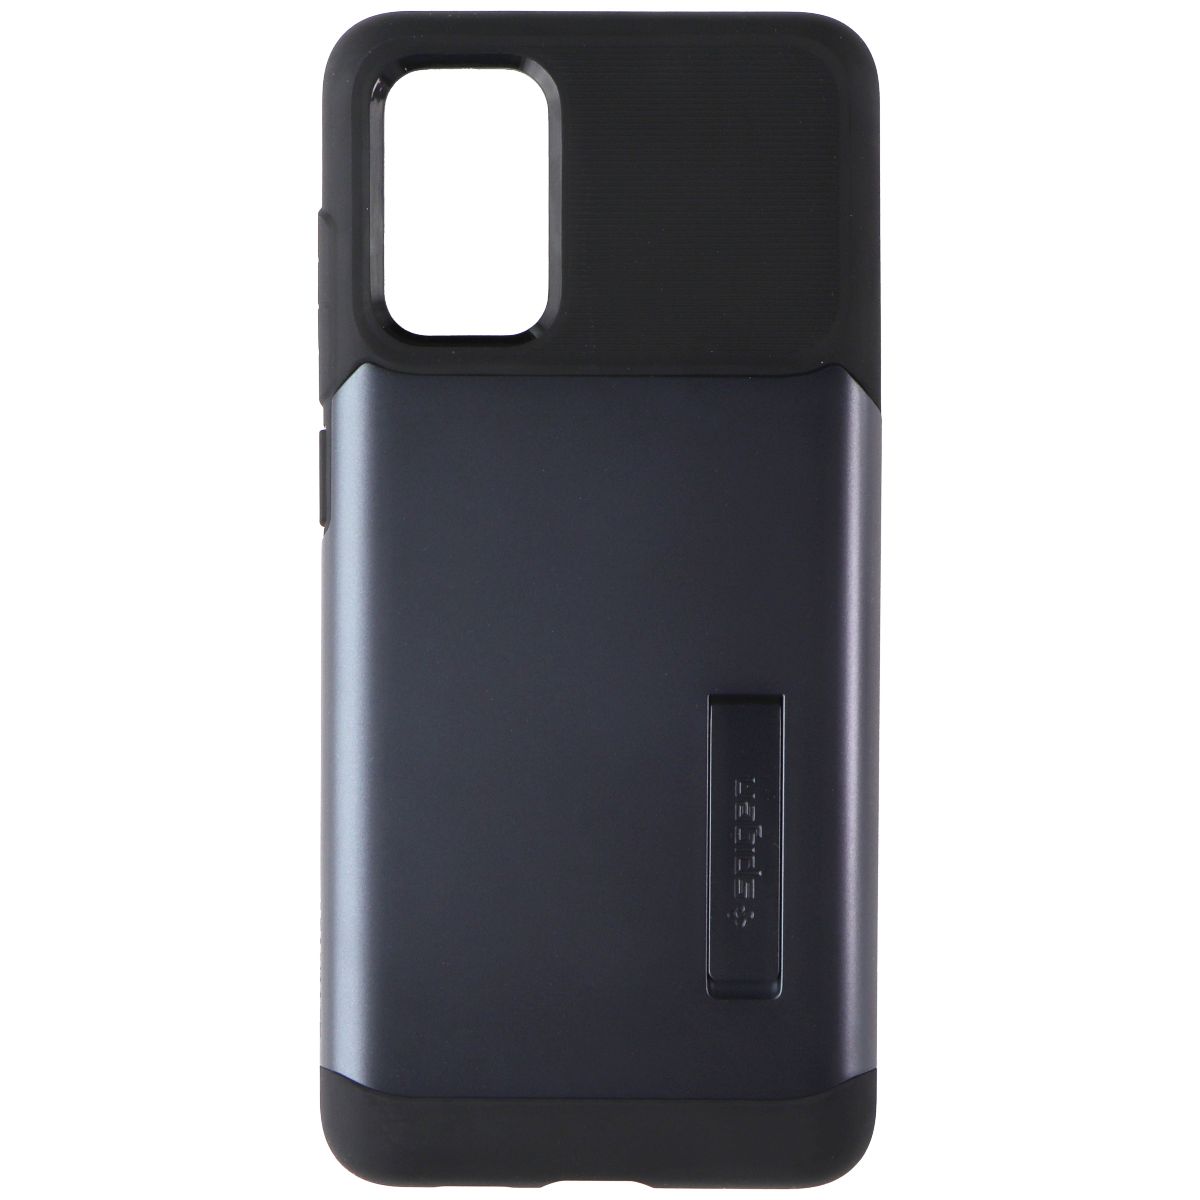 Spigen Slim Armor Designed for Samsung Galaxy S20 Plus Case (2020) - Metal Slate Cell Phone - Cases, Covers & Skins Spigen    - Simple Cell Bulk Wholesale Pricing - USA Seller